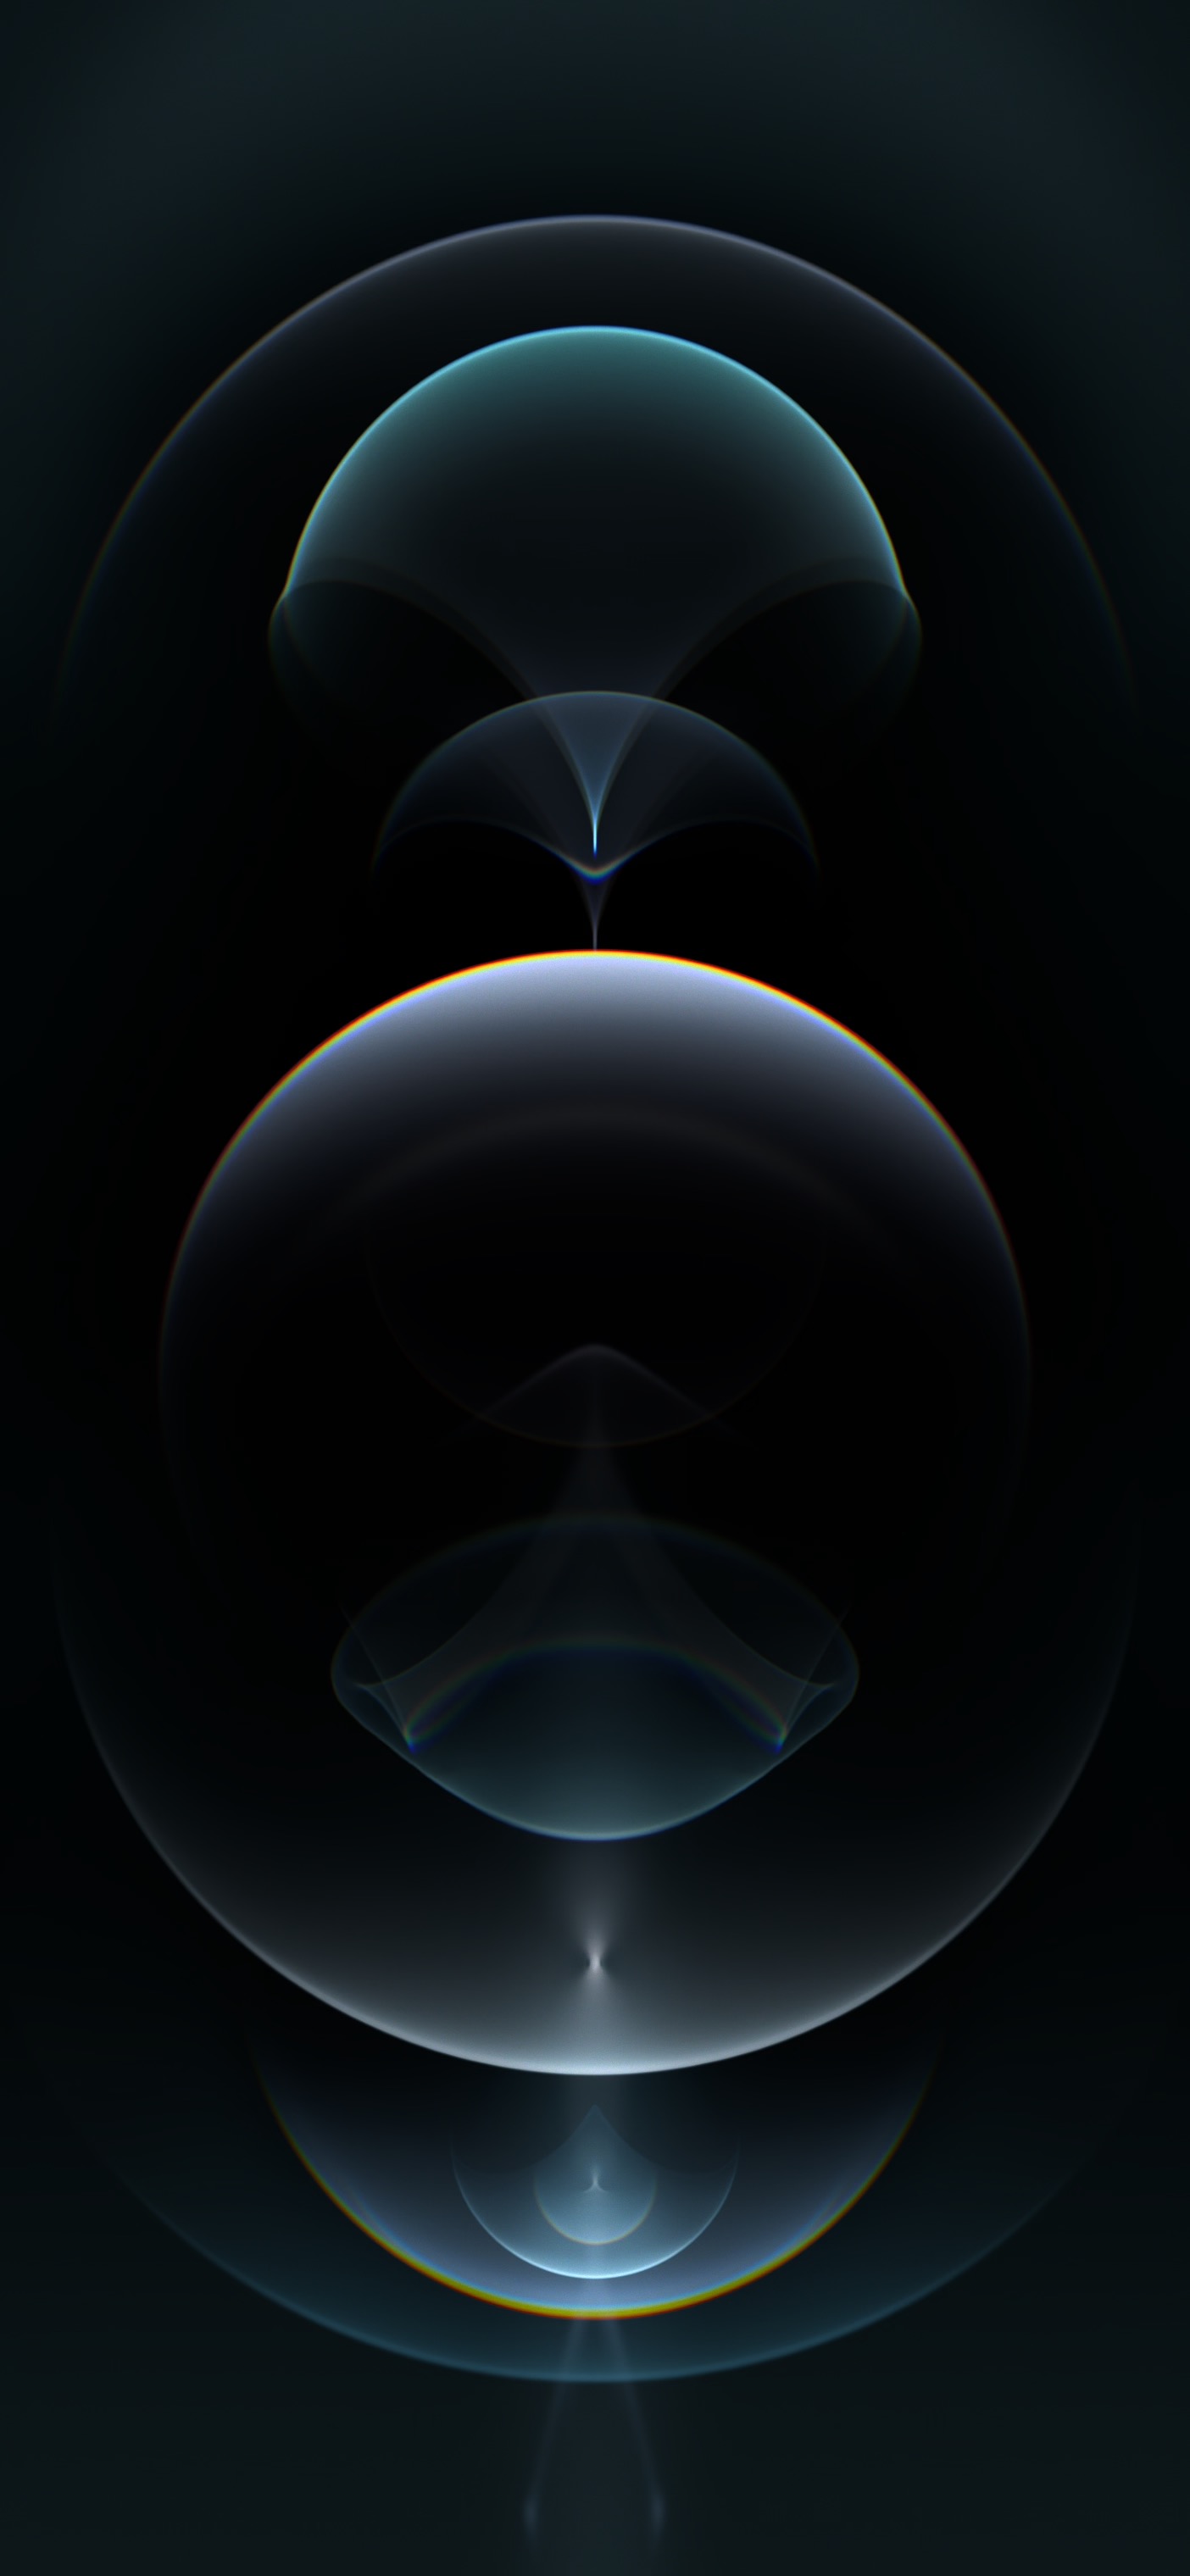 iPhone 12 Pro - Resonance Silver (Light) - LIVE Wallpaper ...